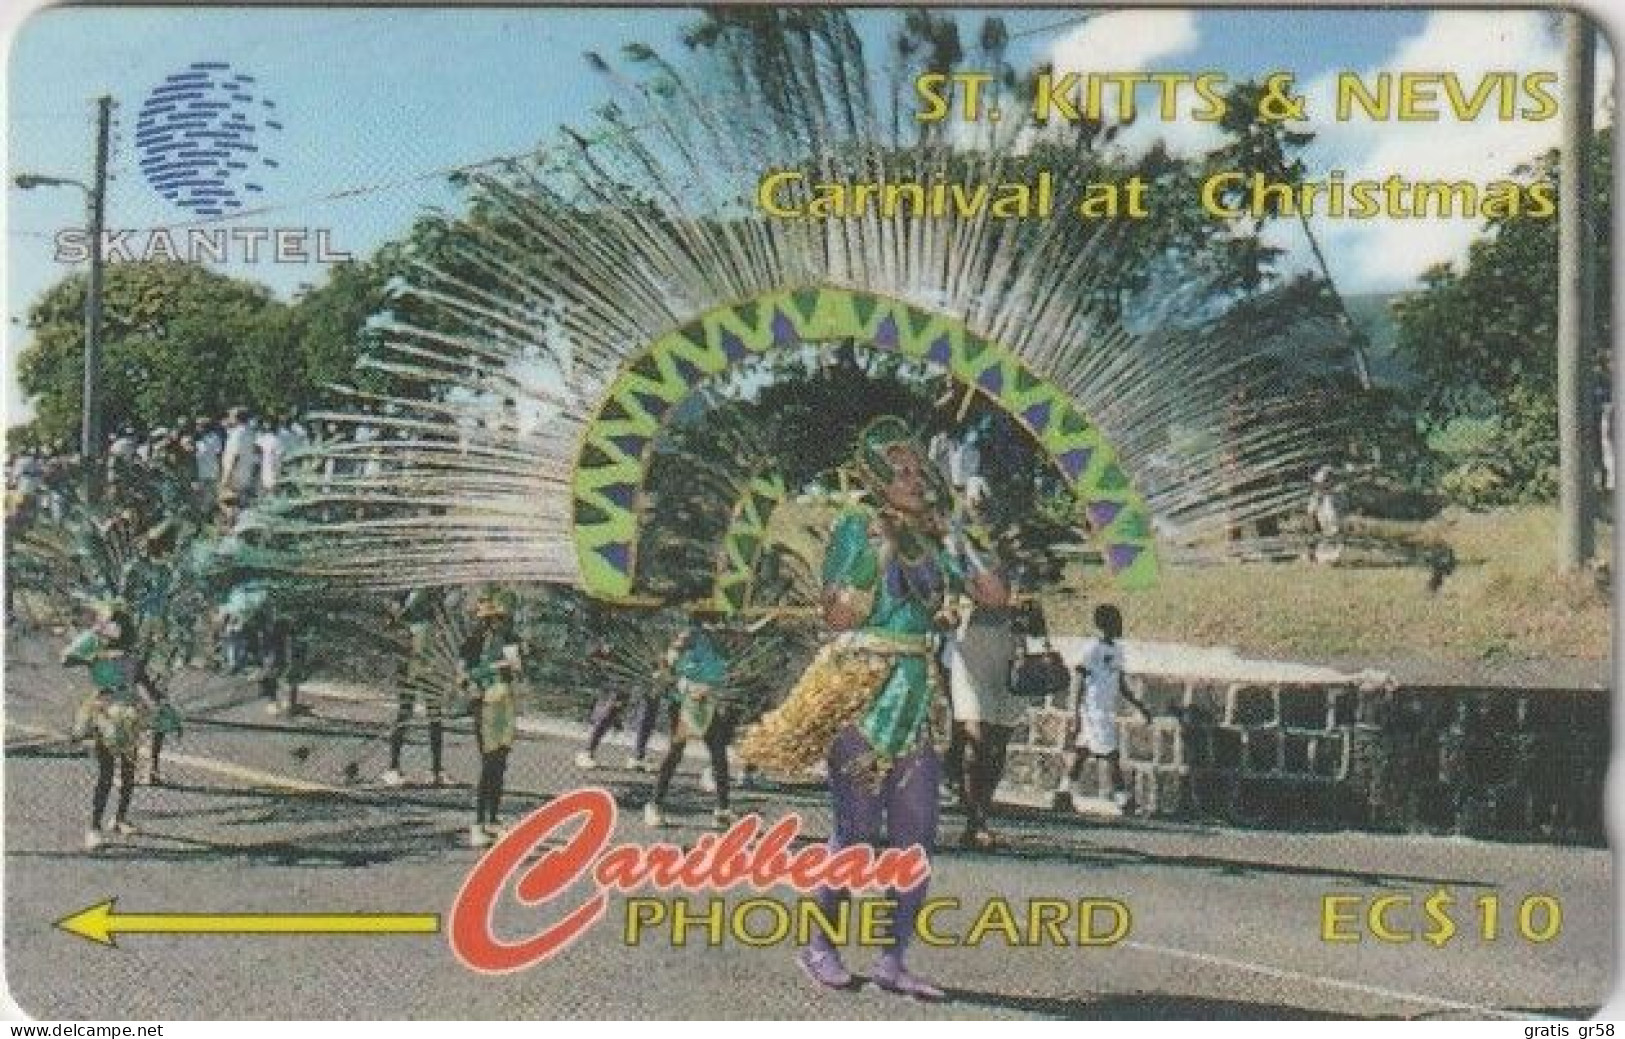 St. Kitts & Nevis - STK-16A, GPT, 16CSKA, Carnival At Christmas 2, 10 EC$, 400ex, 1995, Used - St. Kitts & Nevis